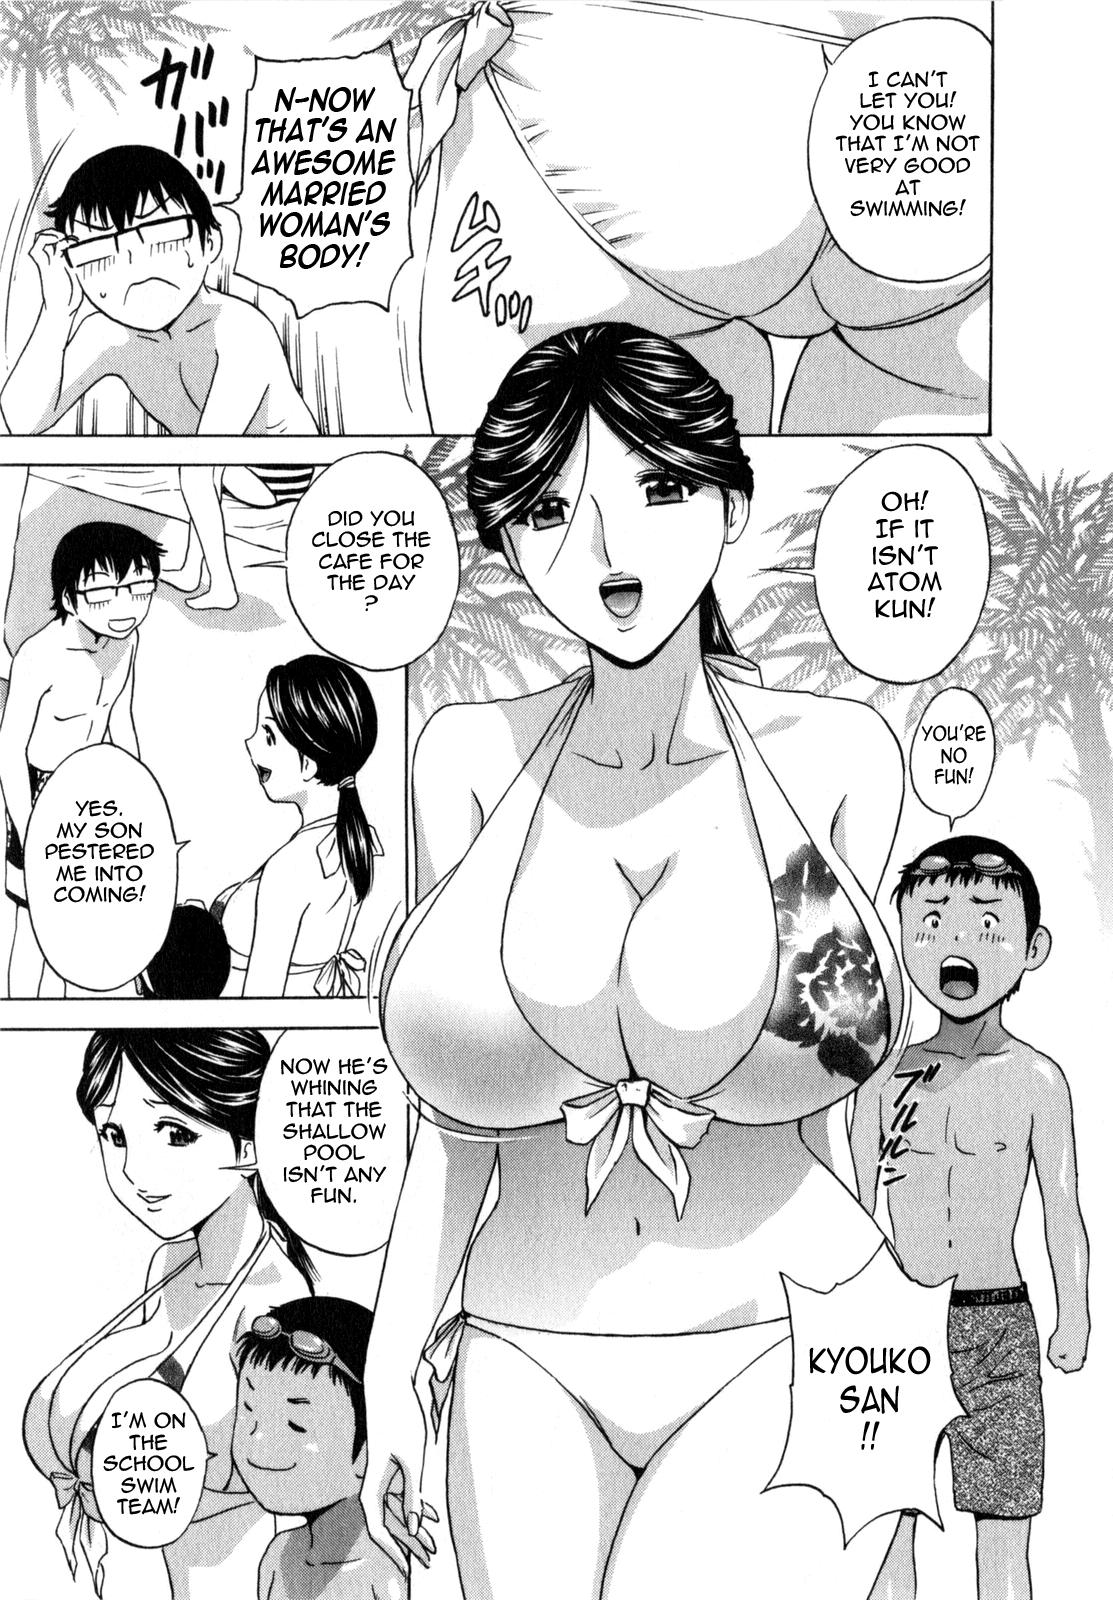 [Hidemaru] Life with Married Women Just Like a Manga 1 - Ch. 1-8 [English] {Tadanohito} 127